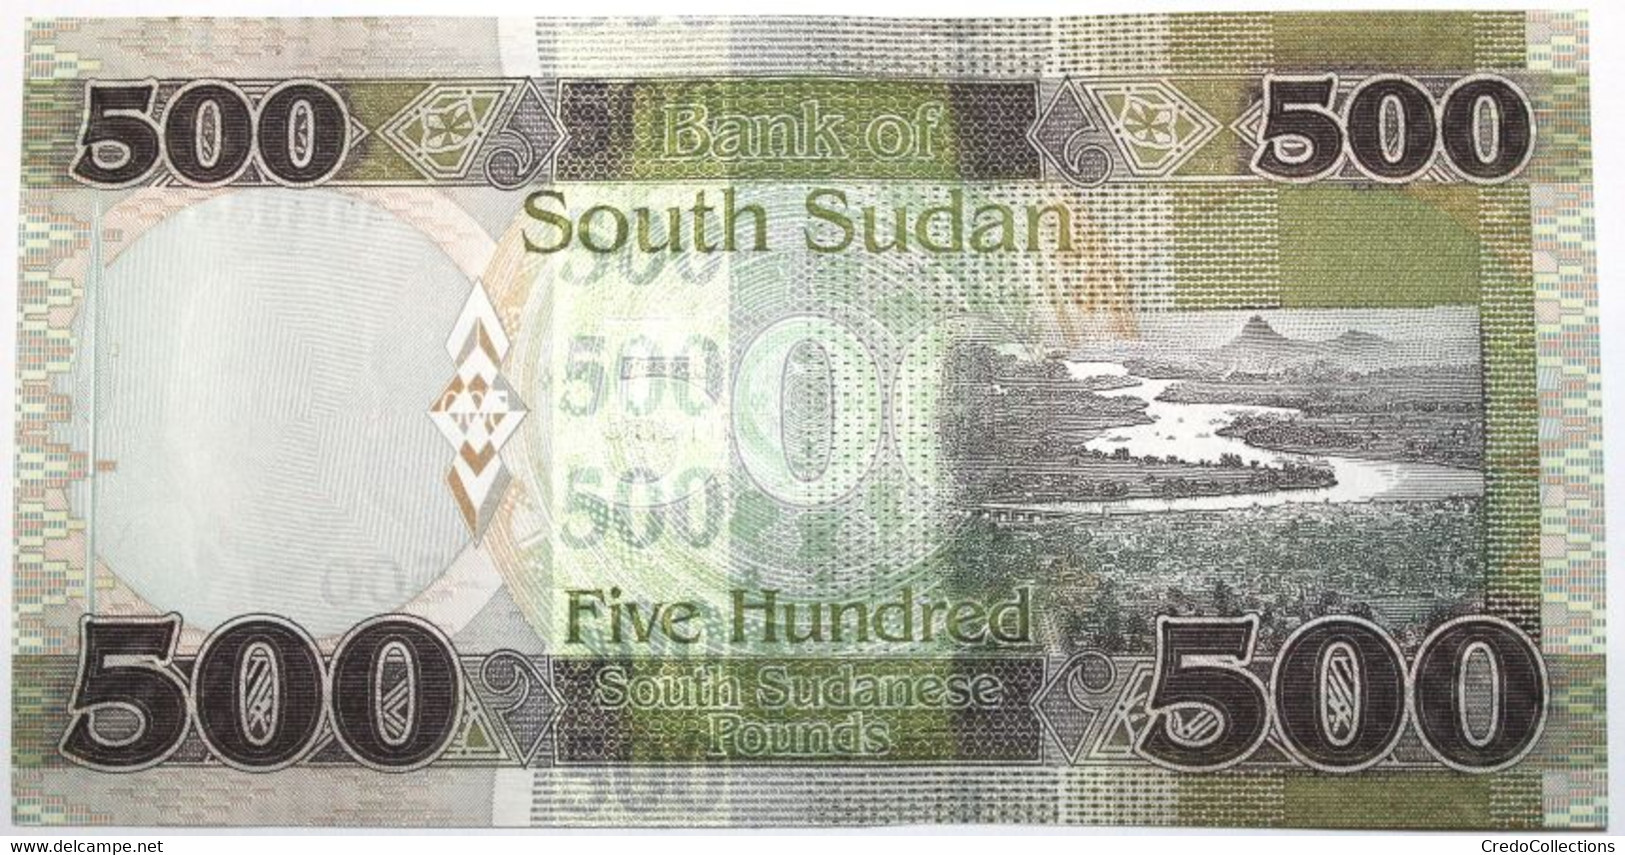 Soudan Du Sud - 500 Pounds - 2020 - PICK 16b - NEUF - Sudan Del Sud